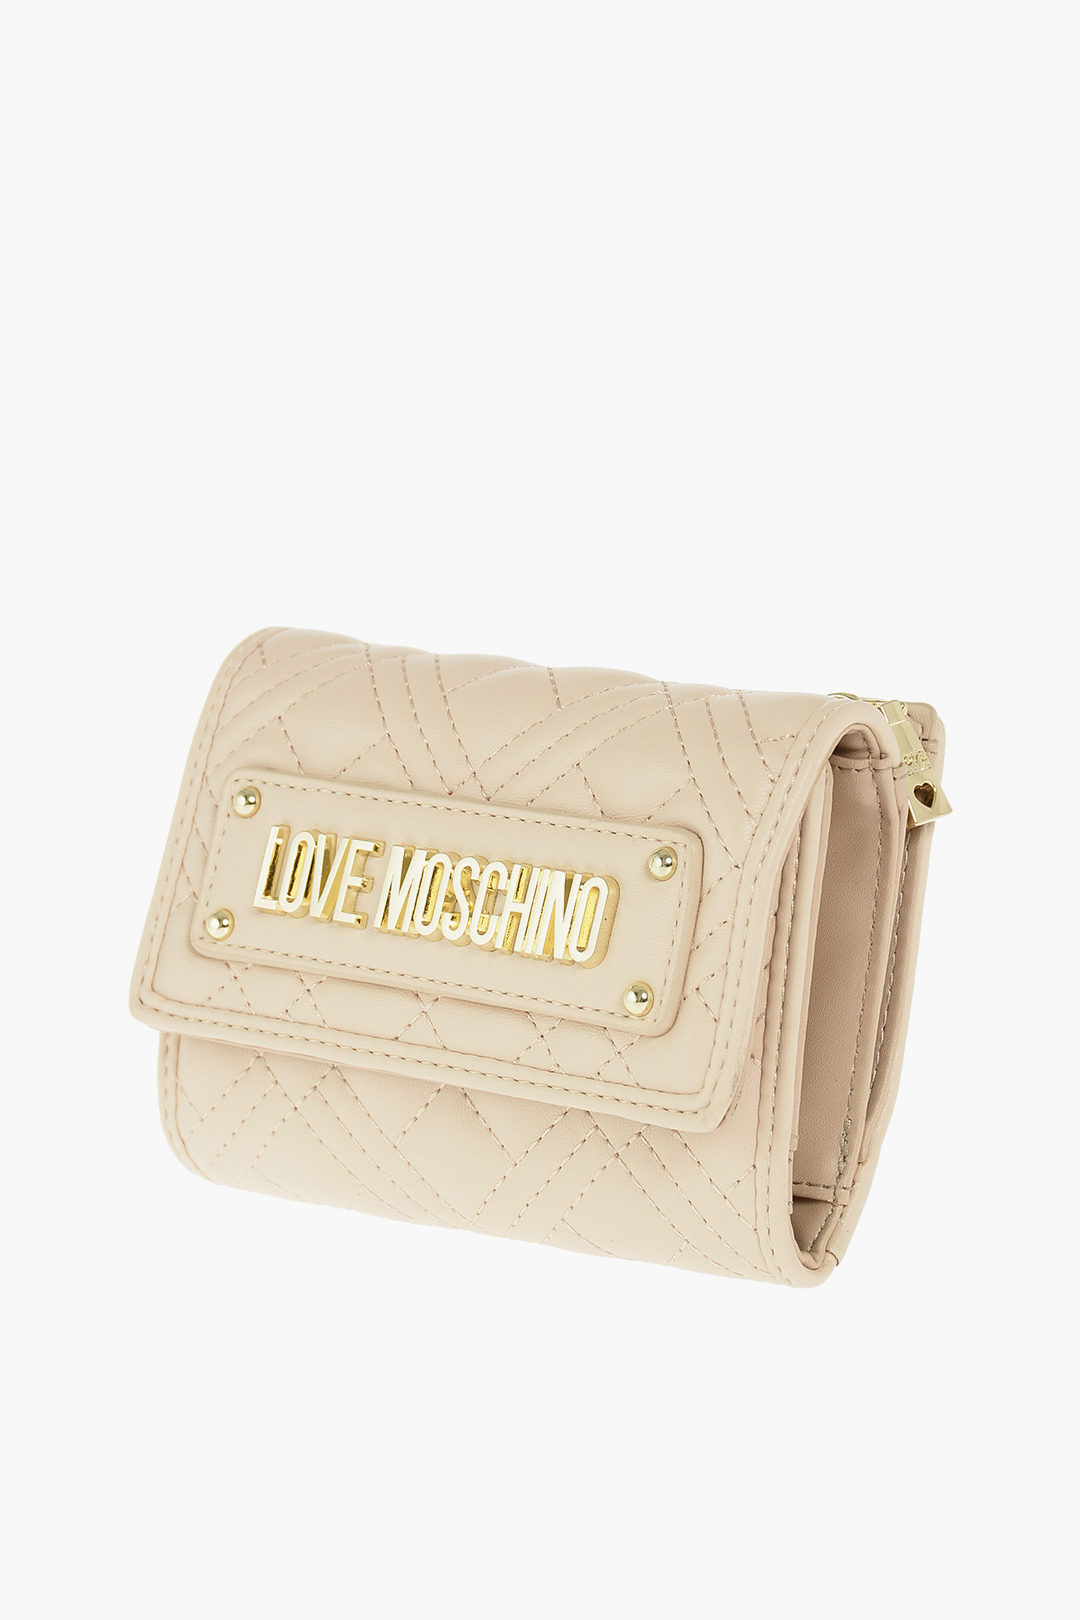 Moschino Handbags, Purses & Wallets for Women